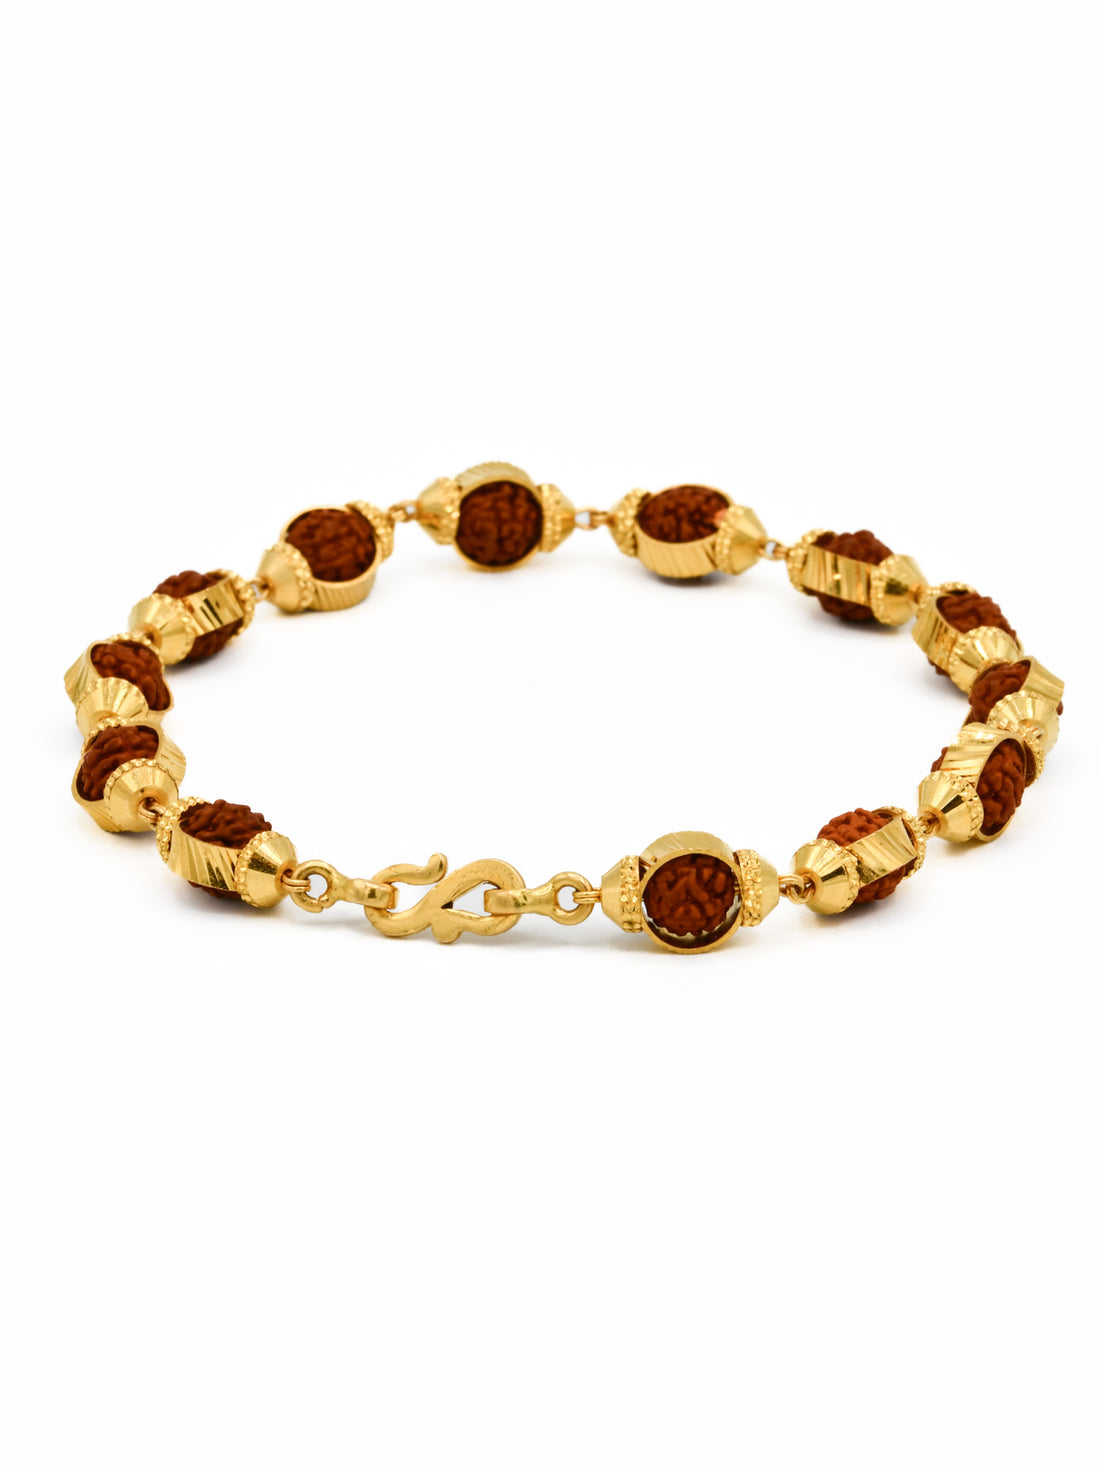 22ct Gold Rudraksh Bracelet - Roop Darshan